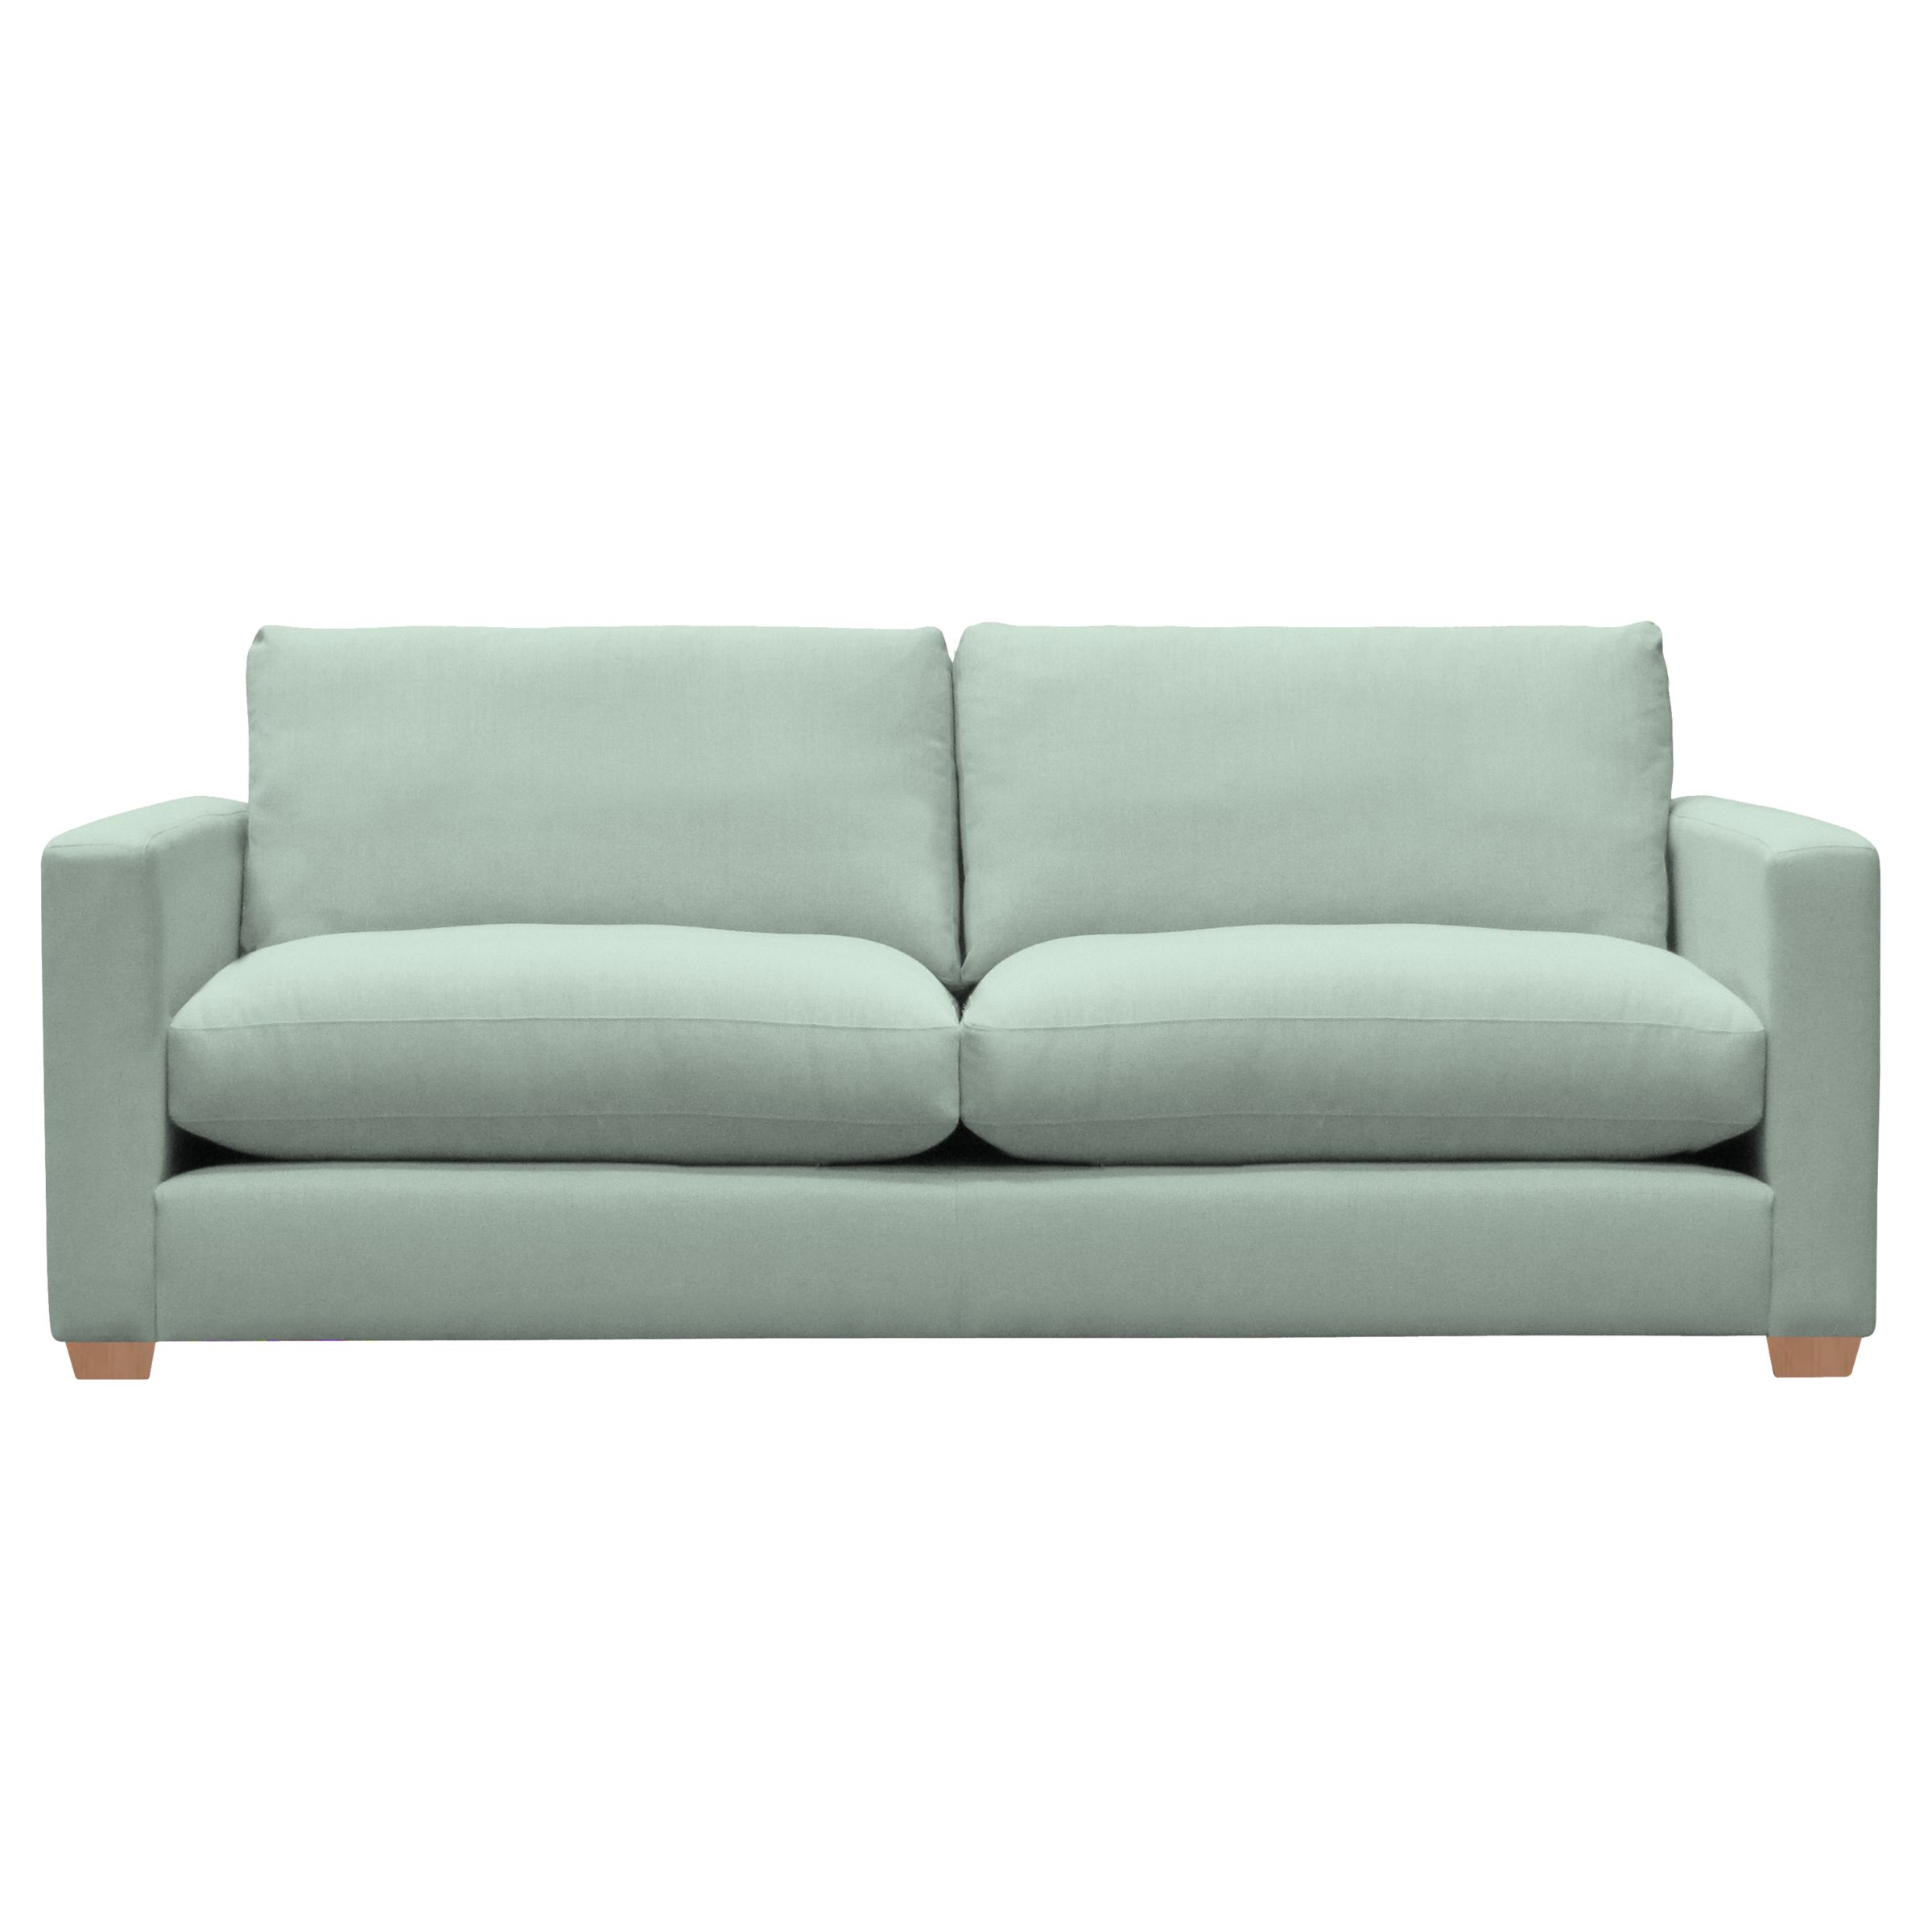 John Lewis Options Slim Arm Grand Sofa, Eaton Duck Egg, width 225cm